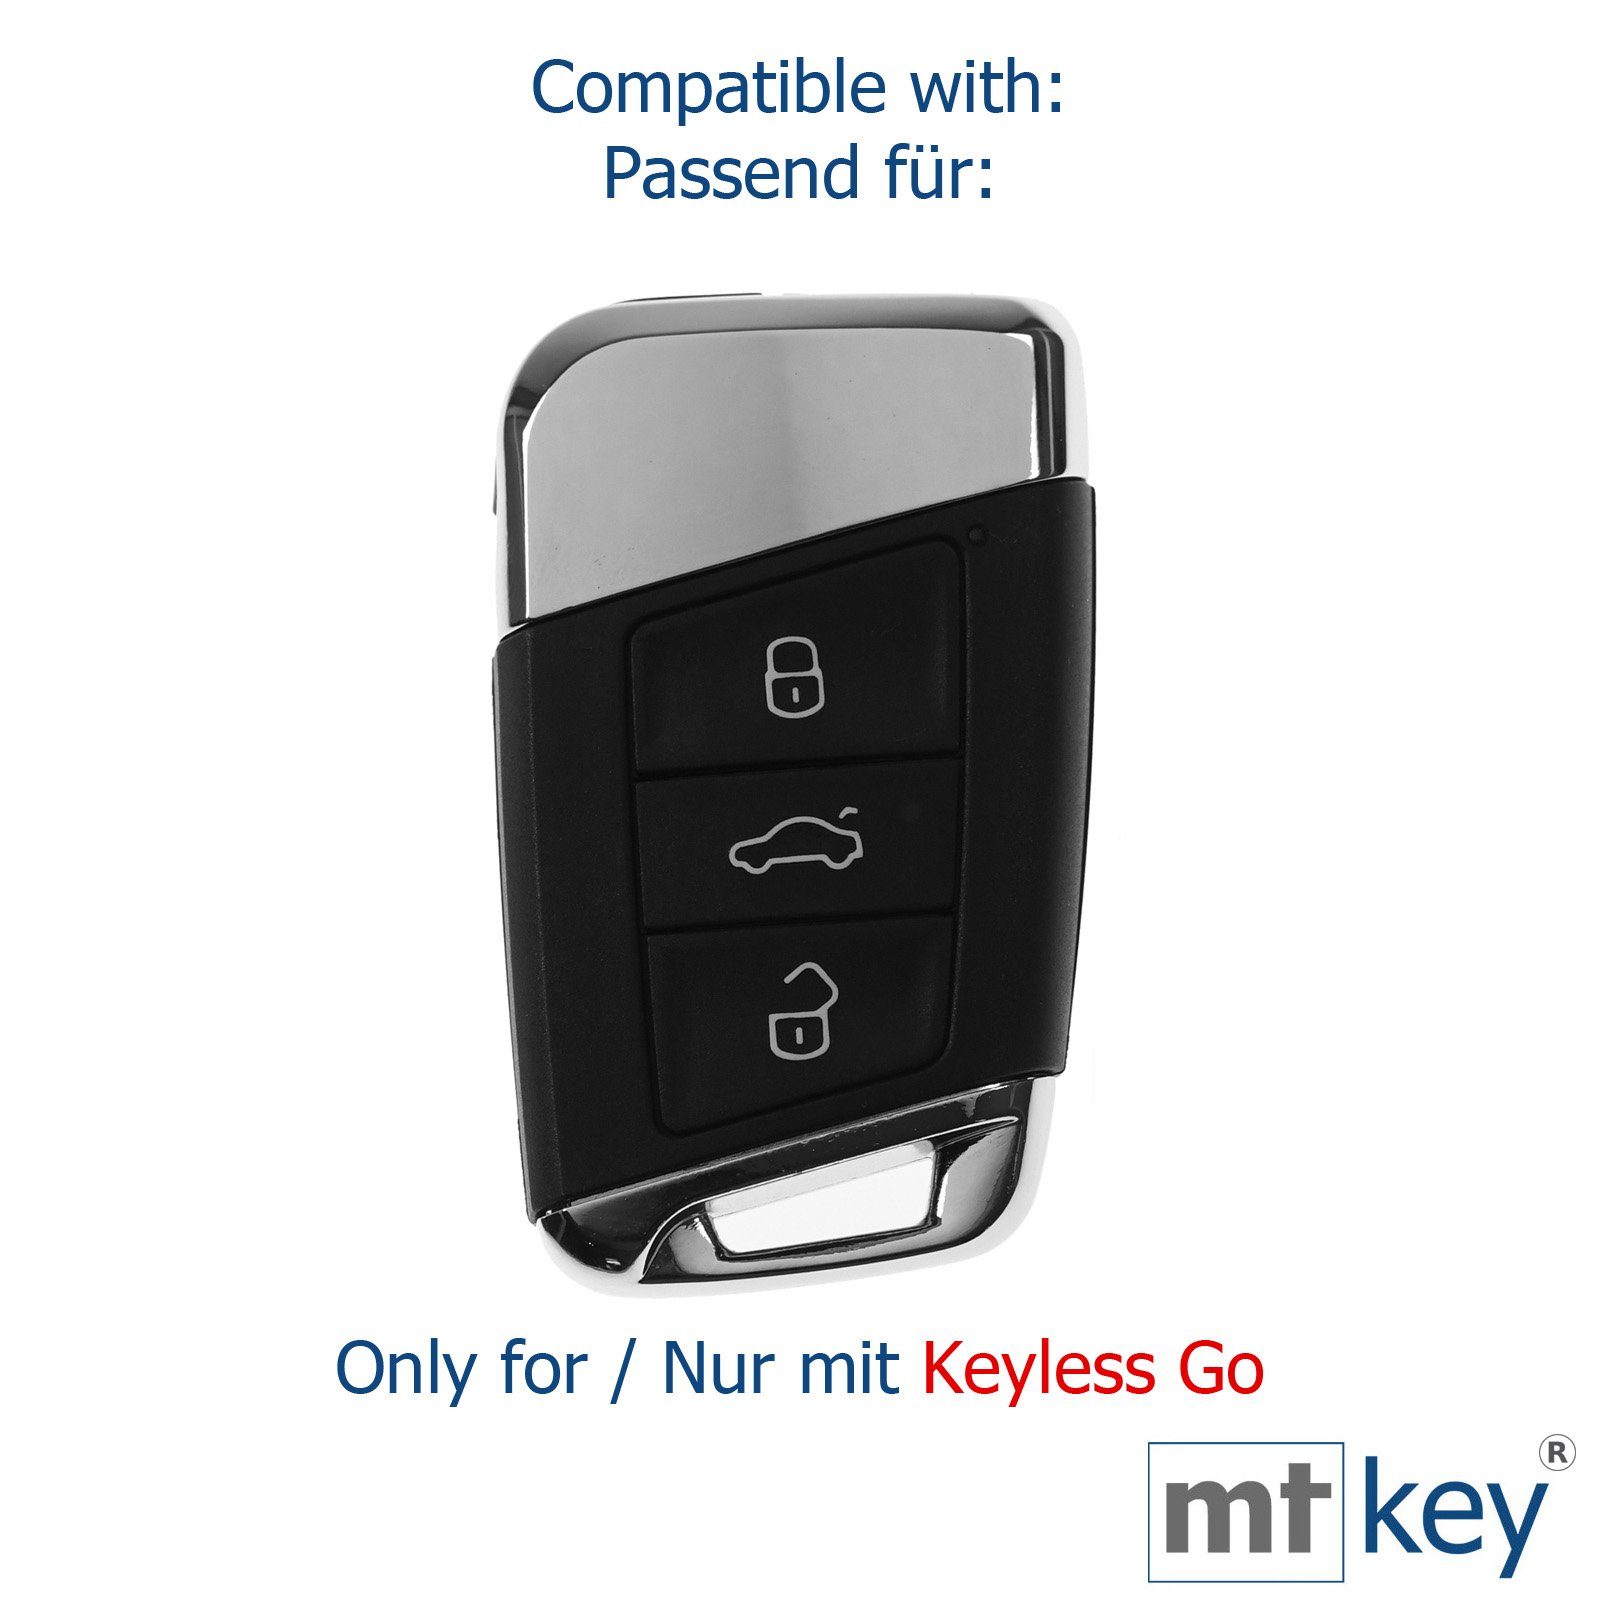 Tasten Passat KEYLESS Kodiaq Skoda B8 Schlüsseltasche VW Arteon Softcase Pink, für SMARTKEY Schutzhülle Silikon mt-key 3 Autoschlüssel